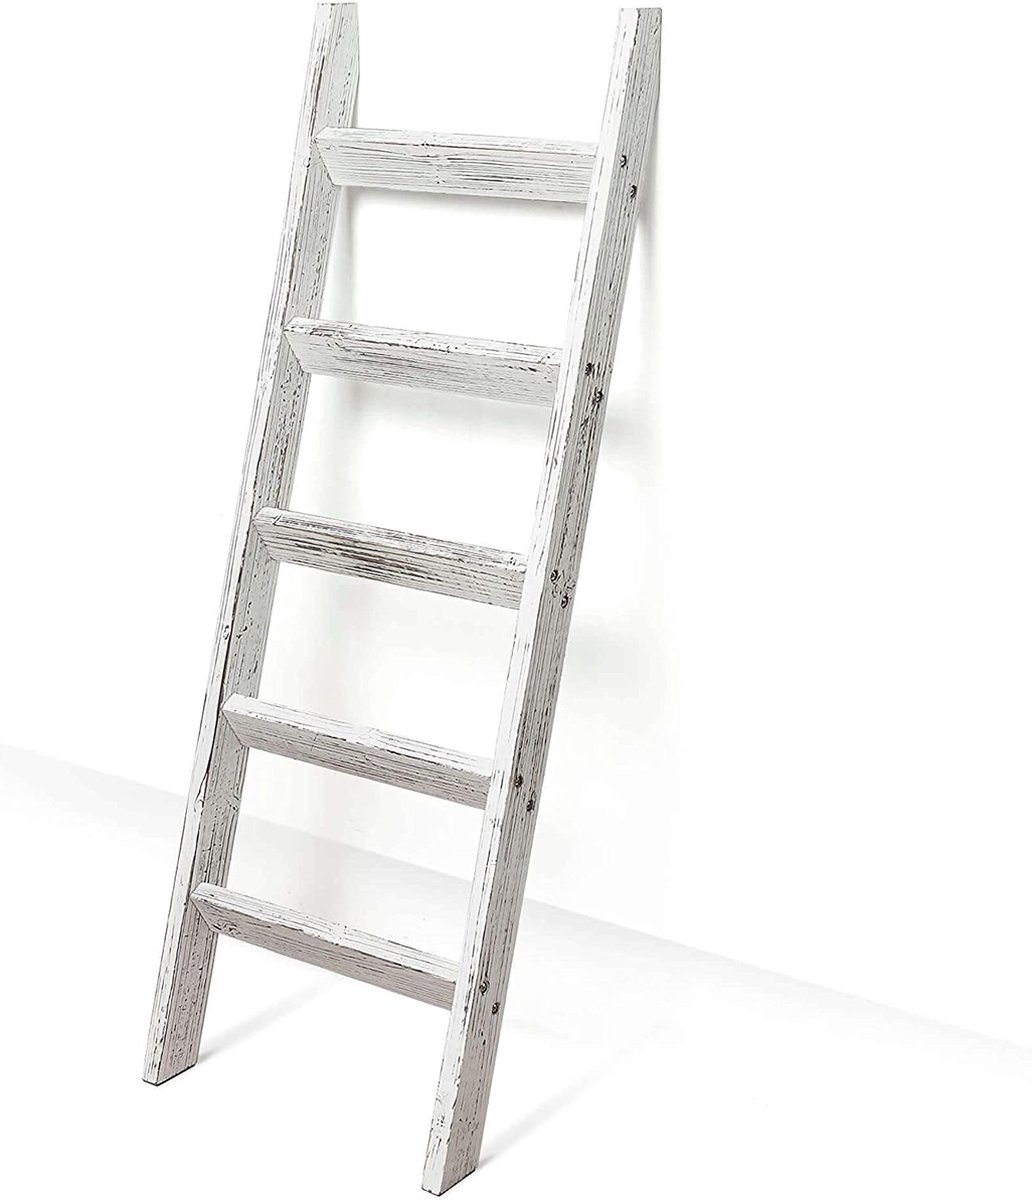 Hallops© Plafond- en Handdoekladder 152 cm - Hoogwaardige Decoratieve Houten Ladder - Rustieke Handdoekrek Ladder van Hout - Witte Houten Decoratieve Ladder - Vintage Kledingladder - Houten Ladder Decoratie (Wit op Bruin)